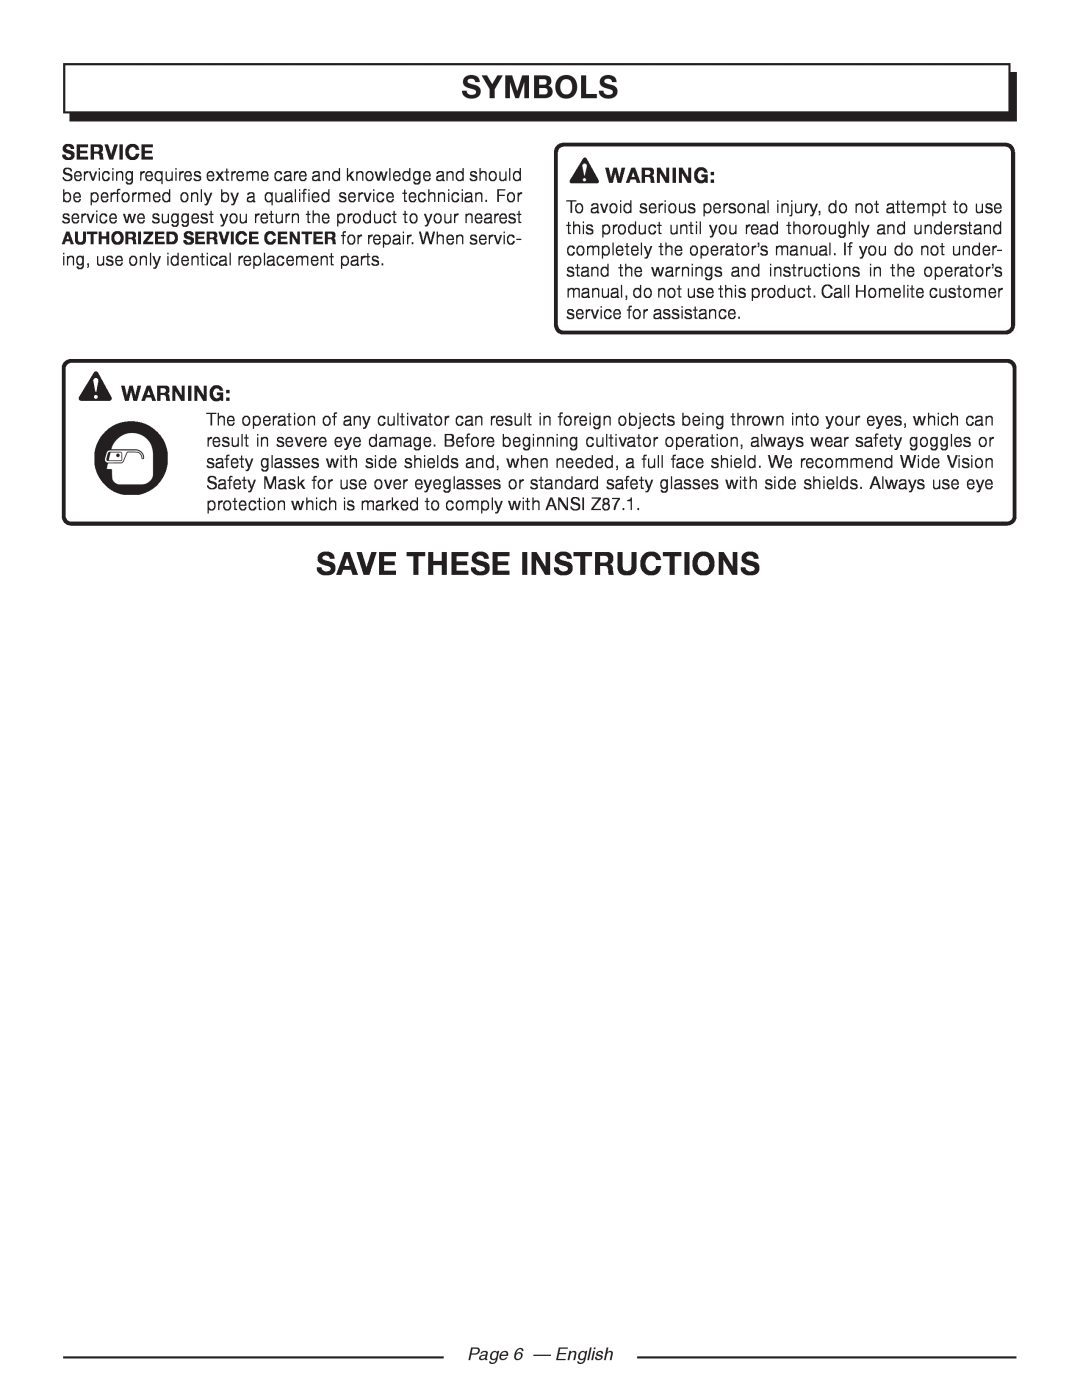 Homelite UT46510 manuel dutilisation Symbols, Save These Instructions, Service, Page 6 - English 